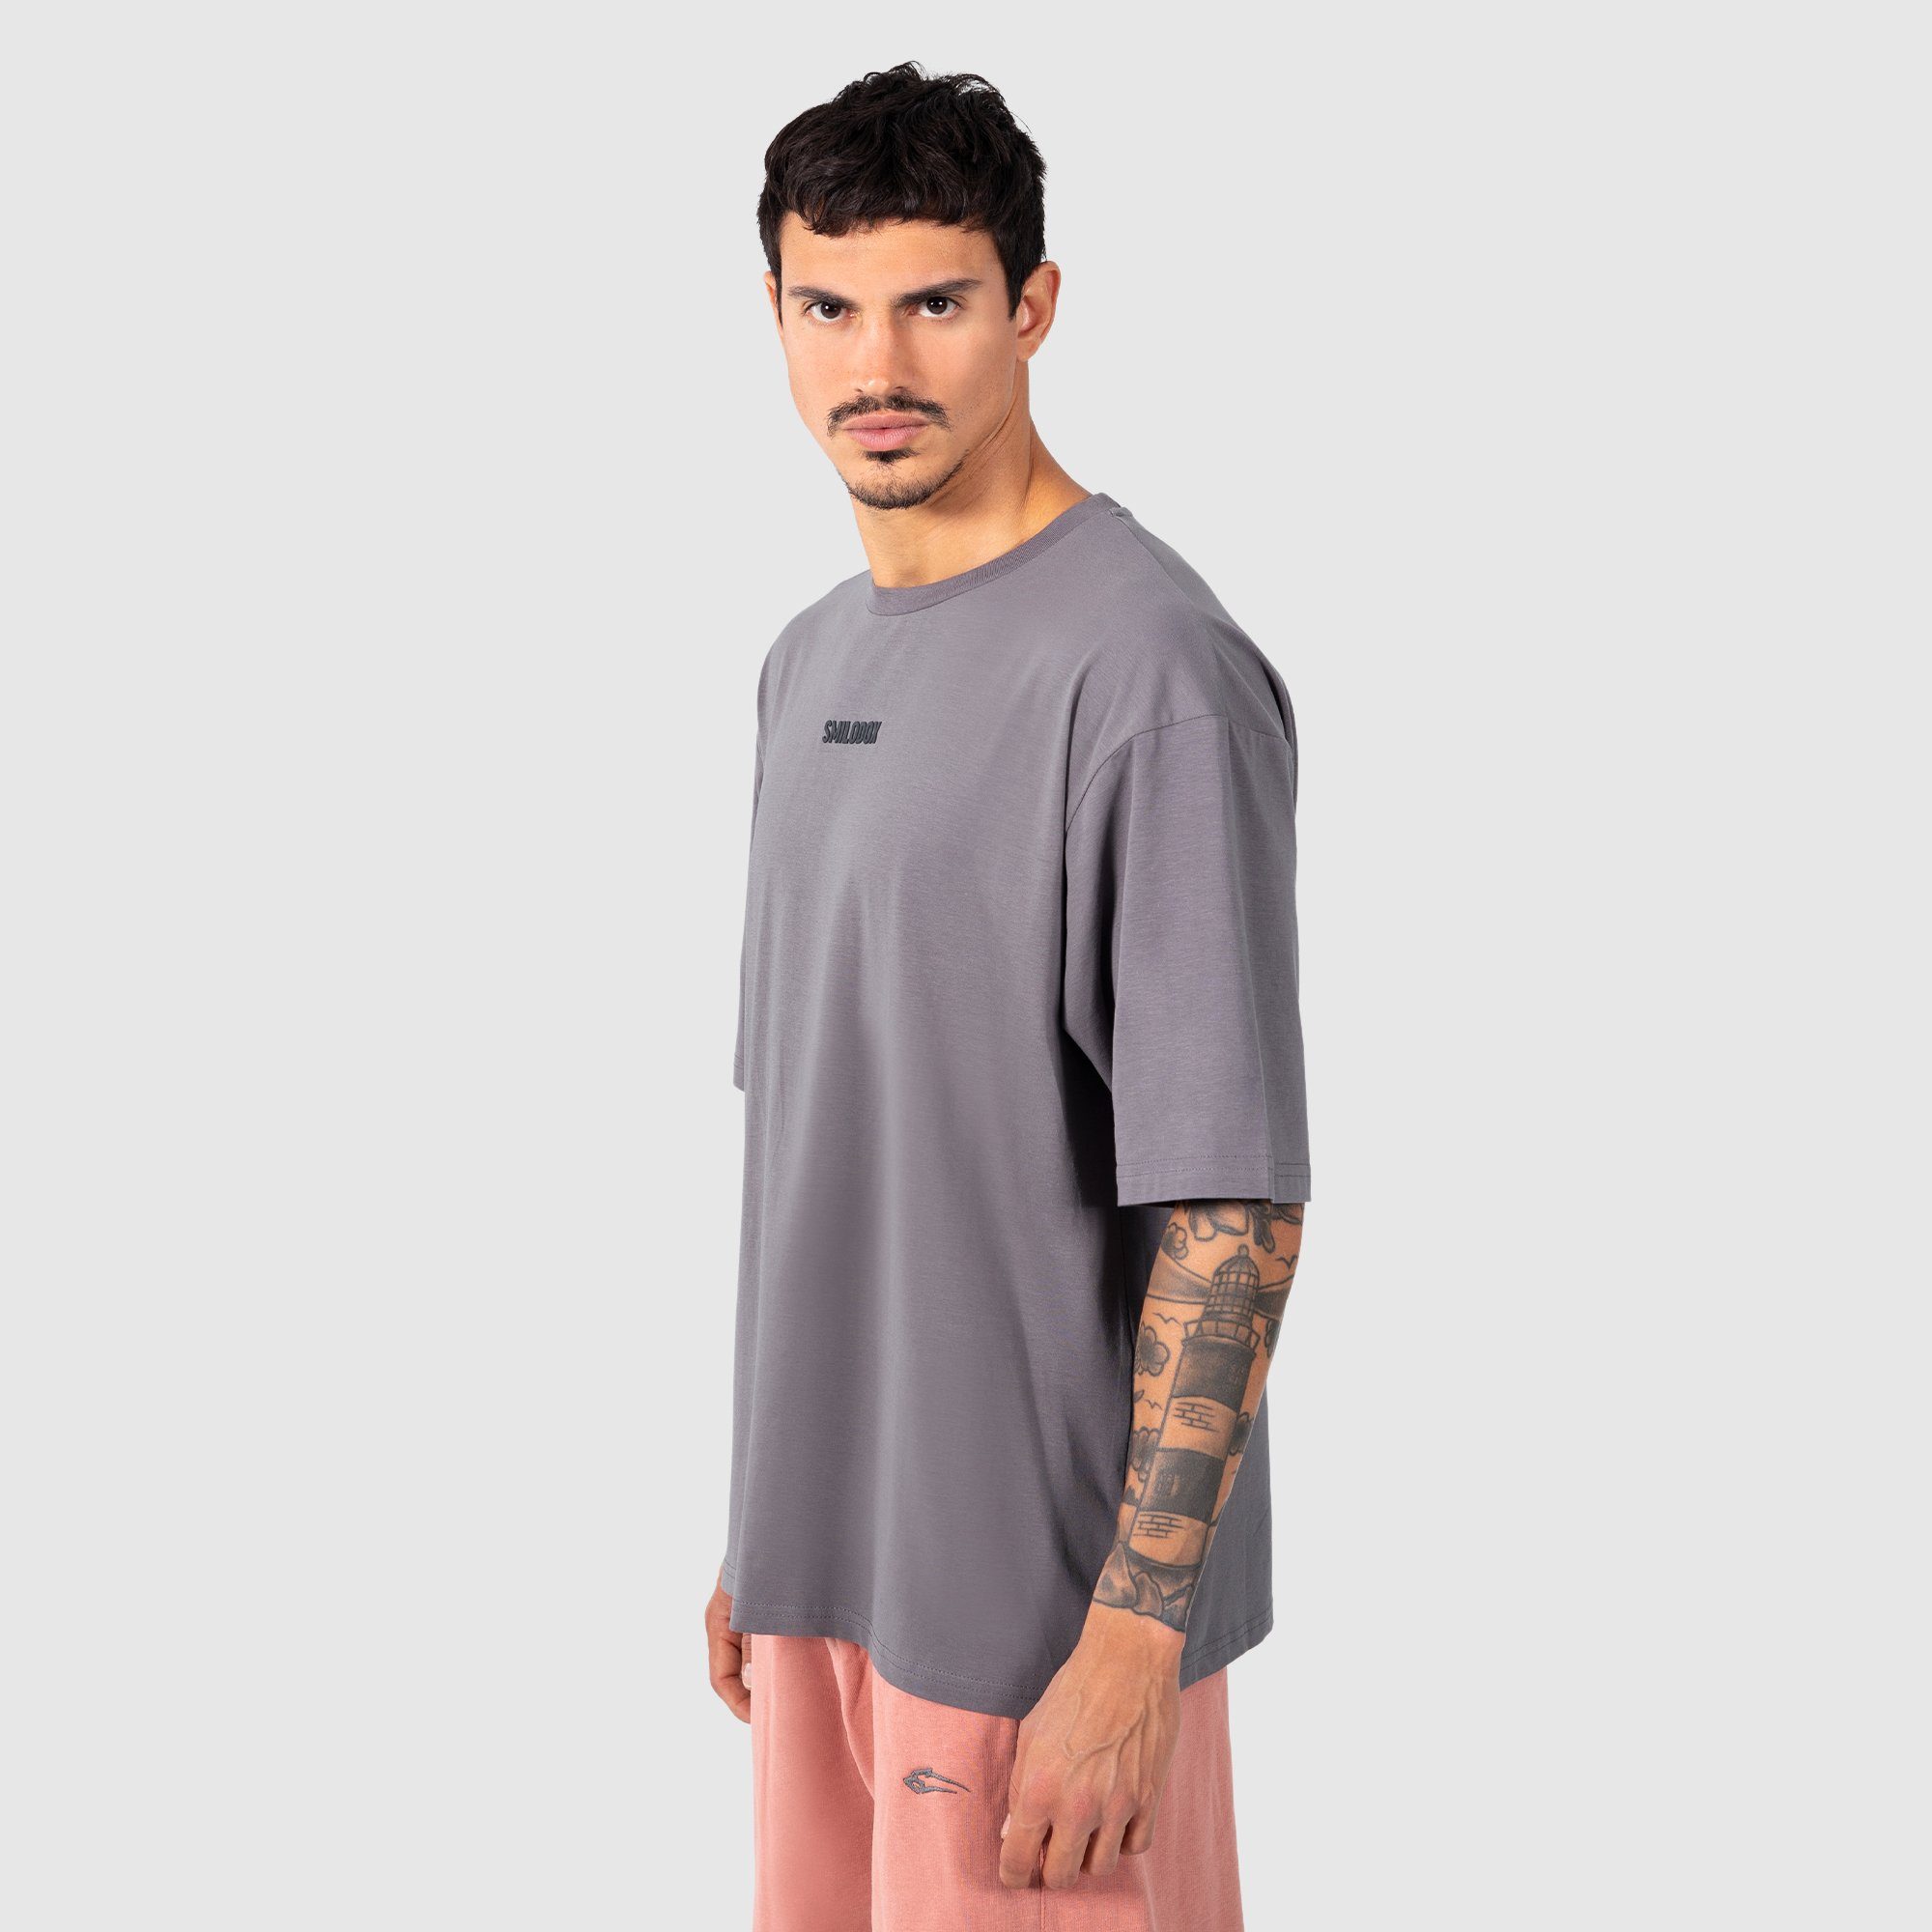 Smilodox T-Shirt Grau Off Oversize Time